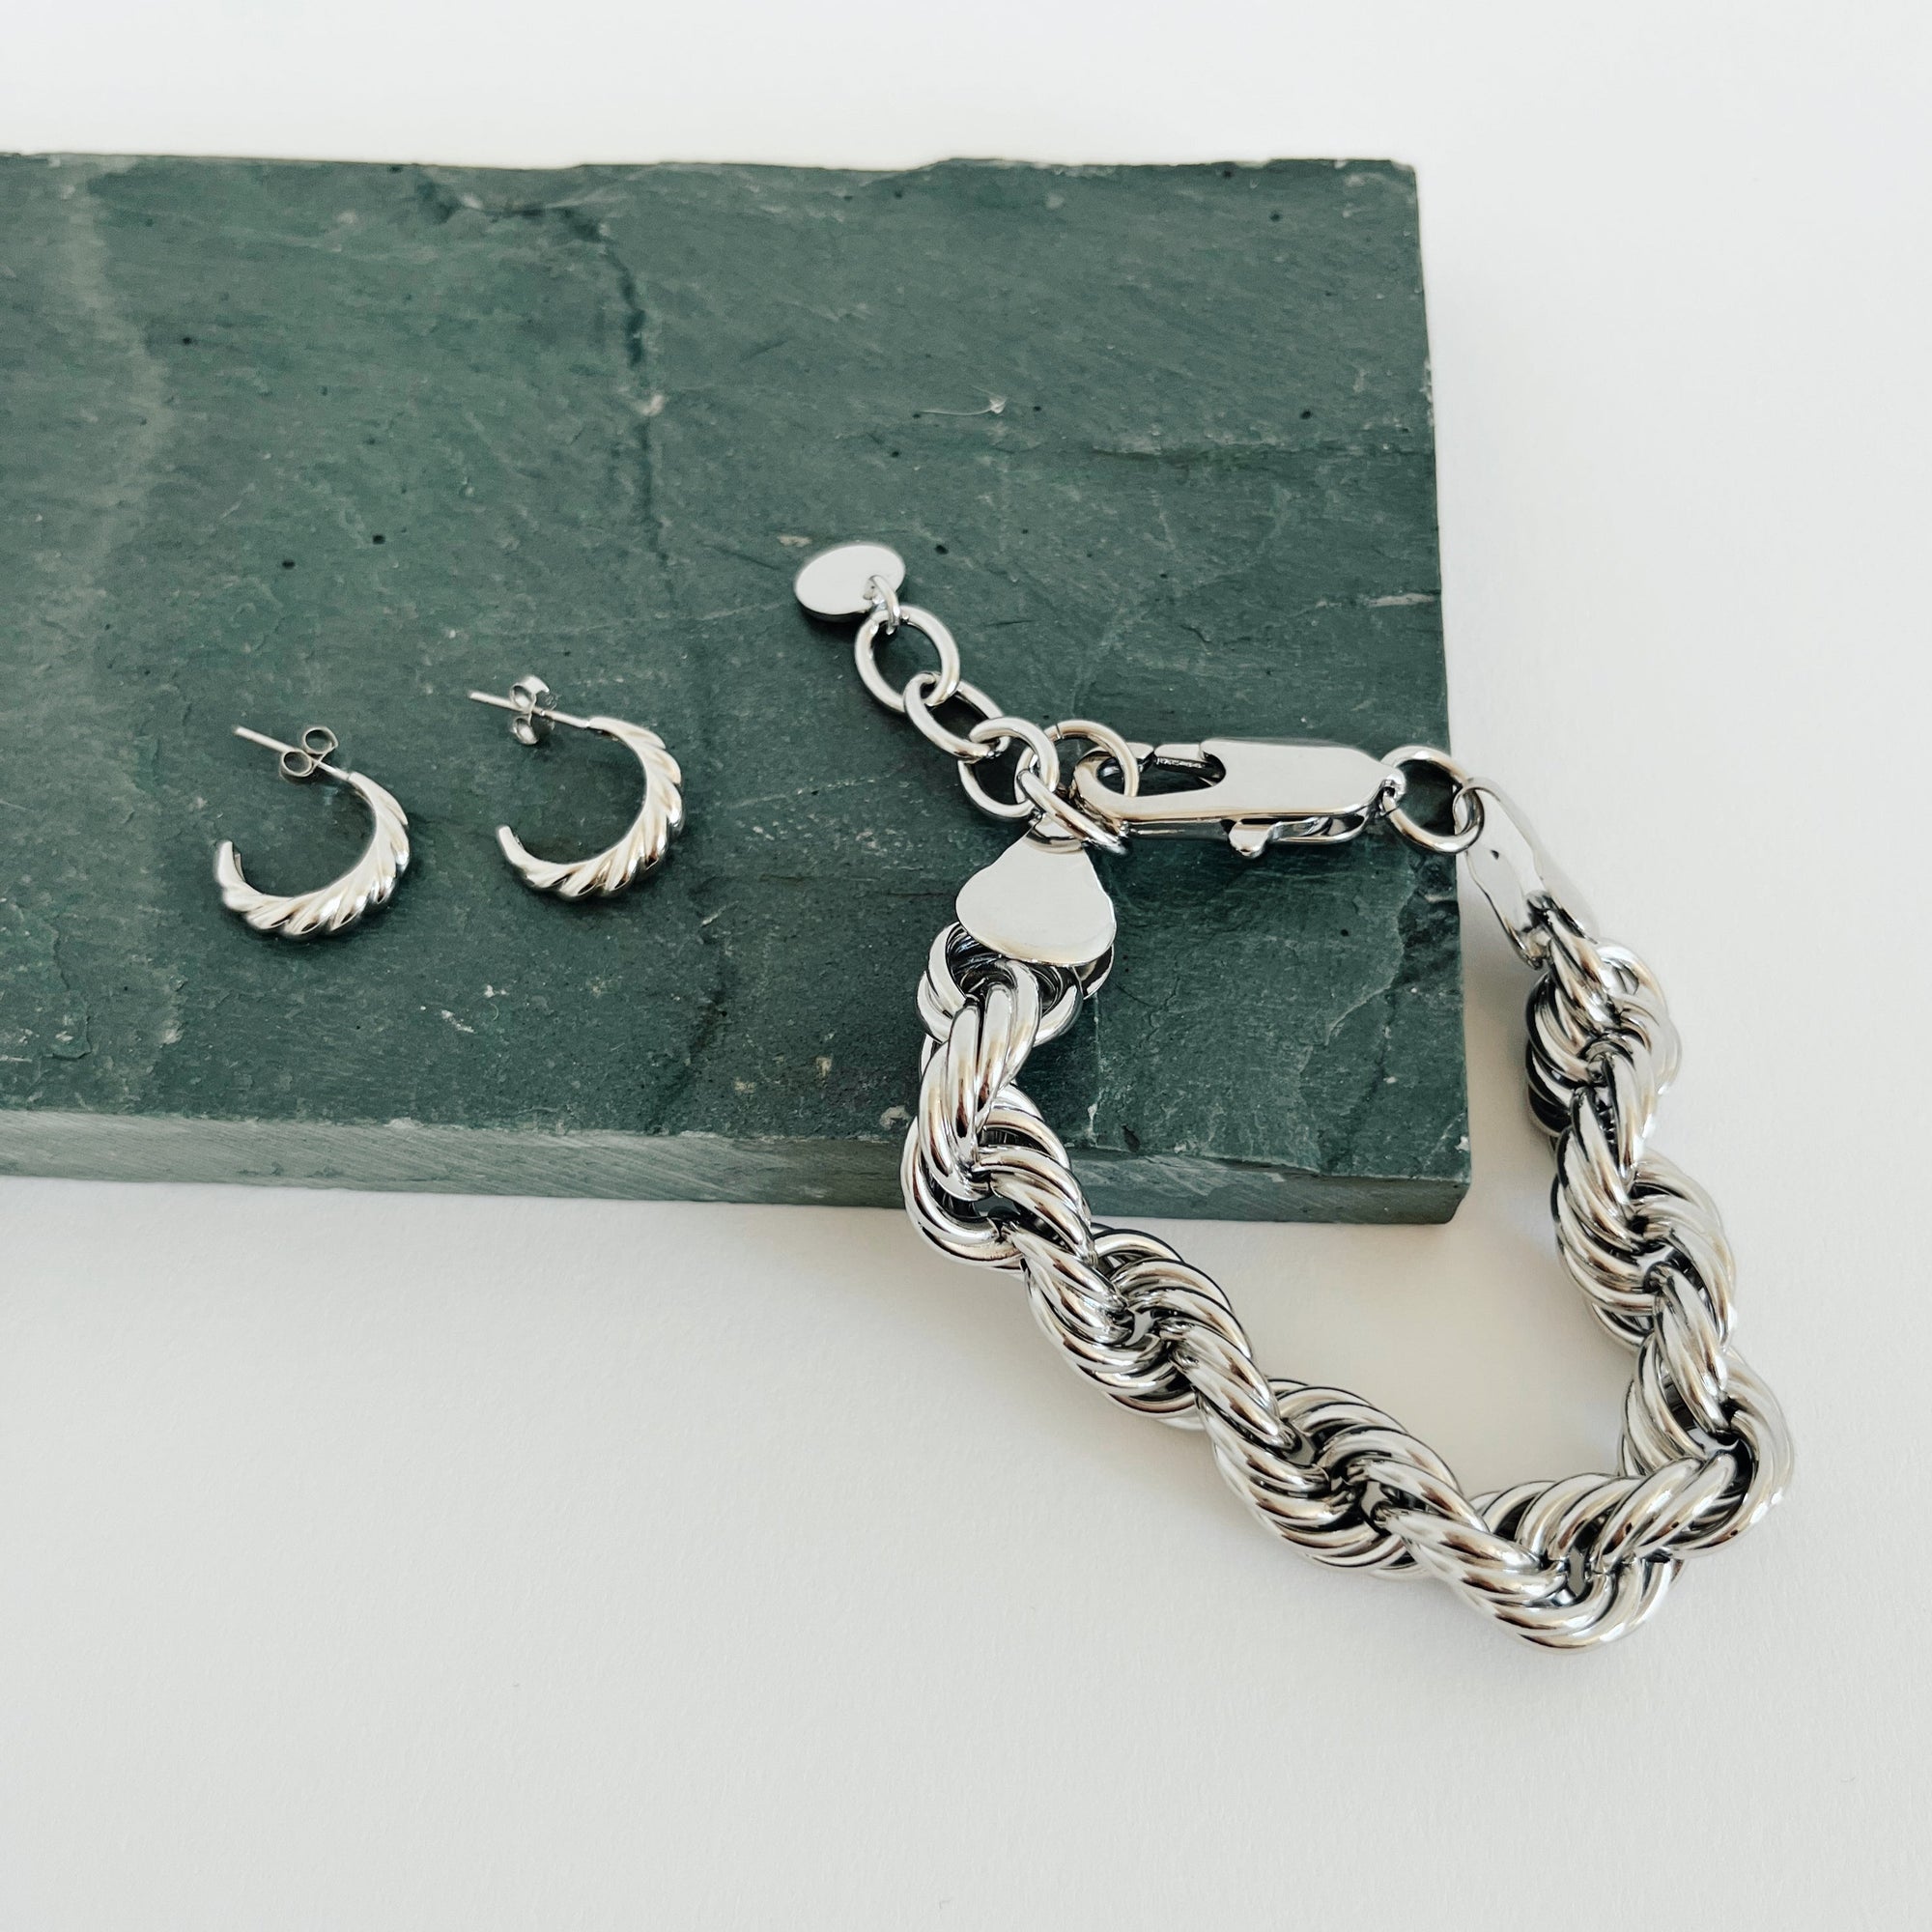 silver kate rope bracelet with silver hoop earrings on green rock